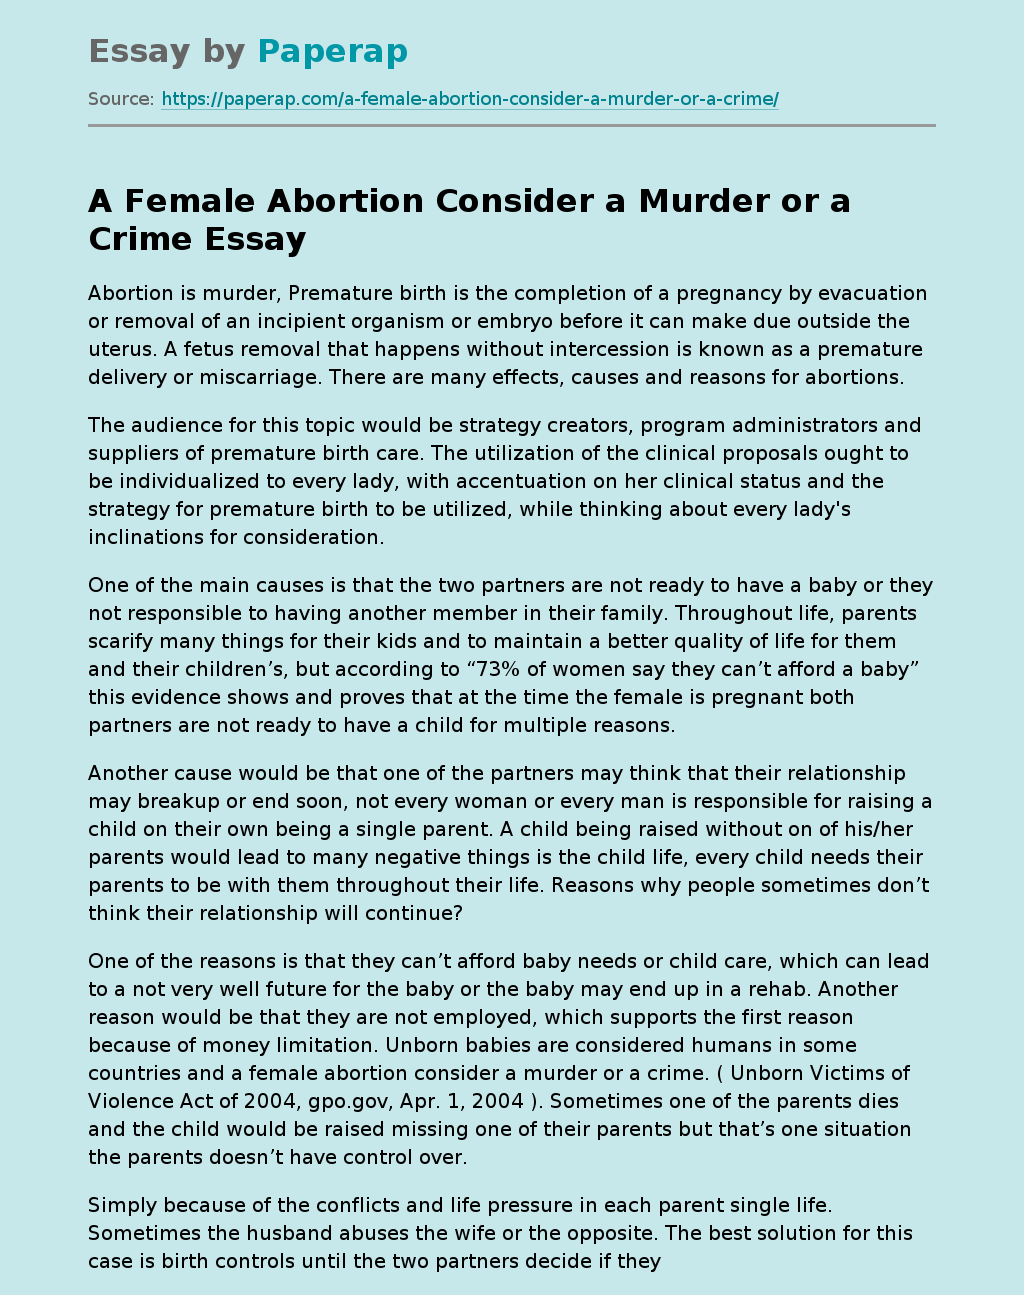 A Female Abortion Consider a Murder or a Crime